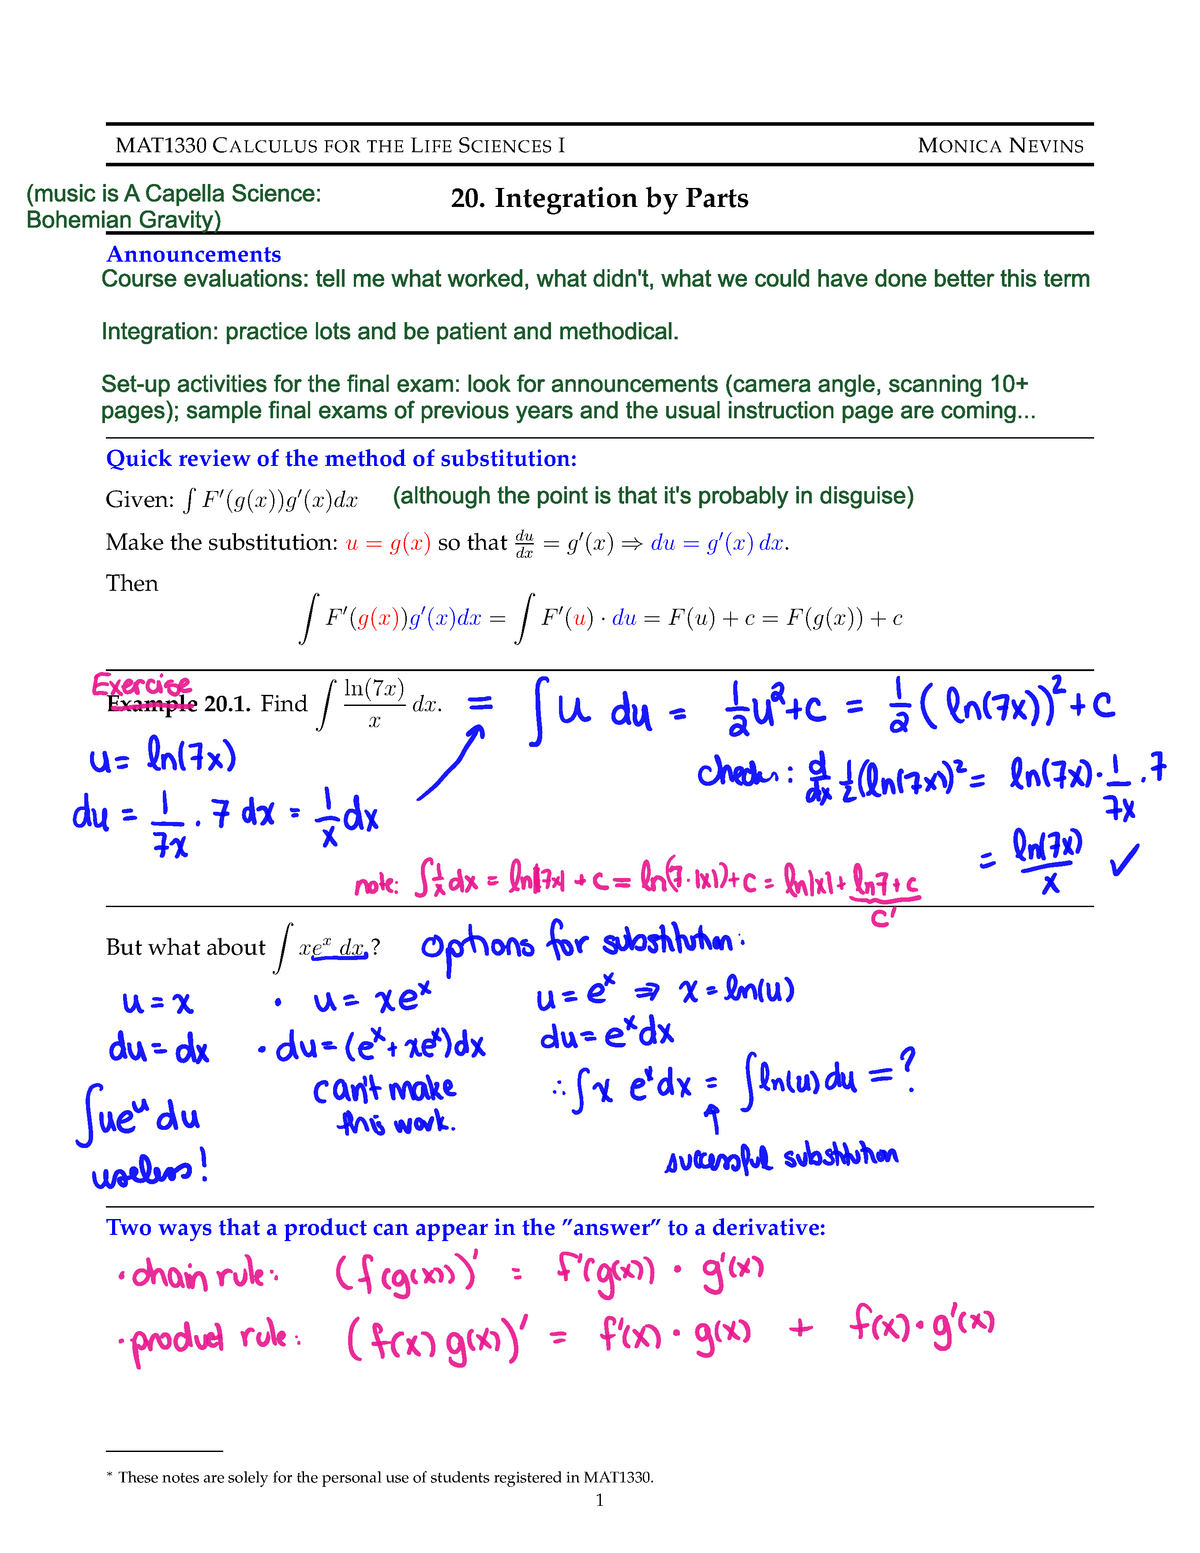 Integration By Parts Notes Studocu